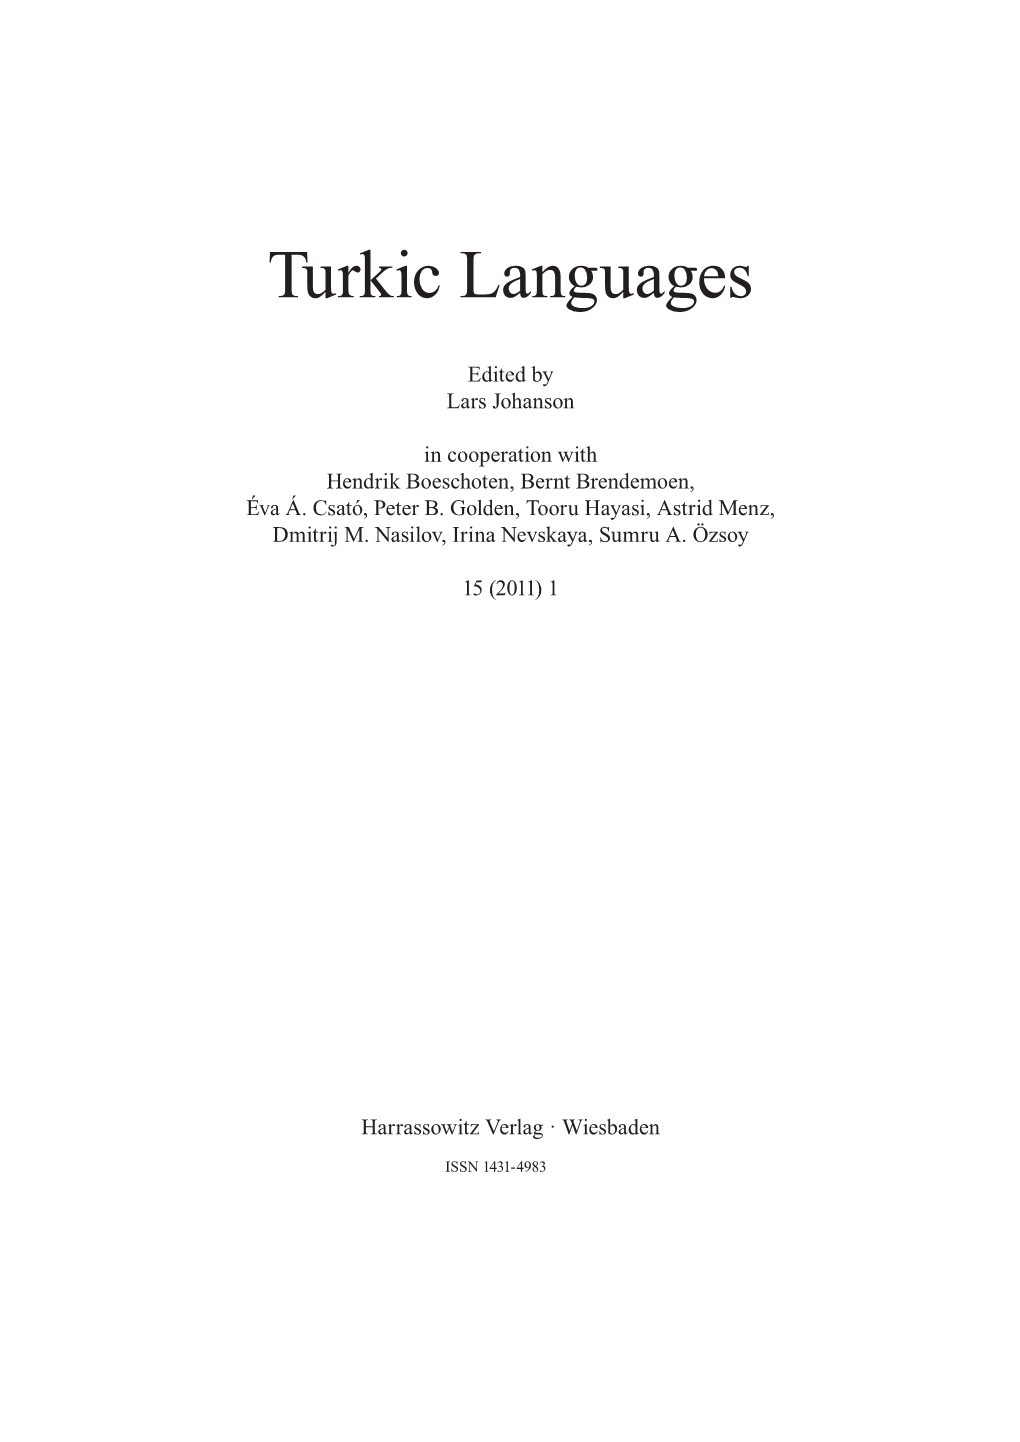 Turkic Languages 15, 3–50